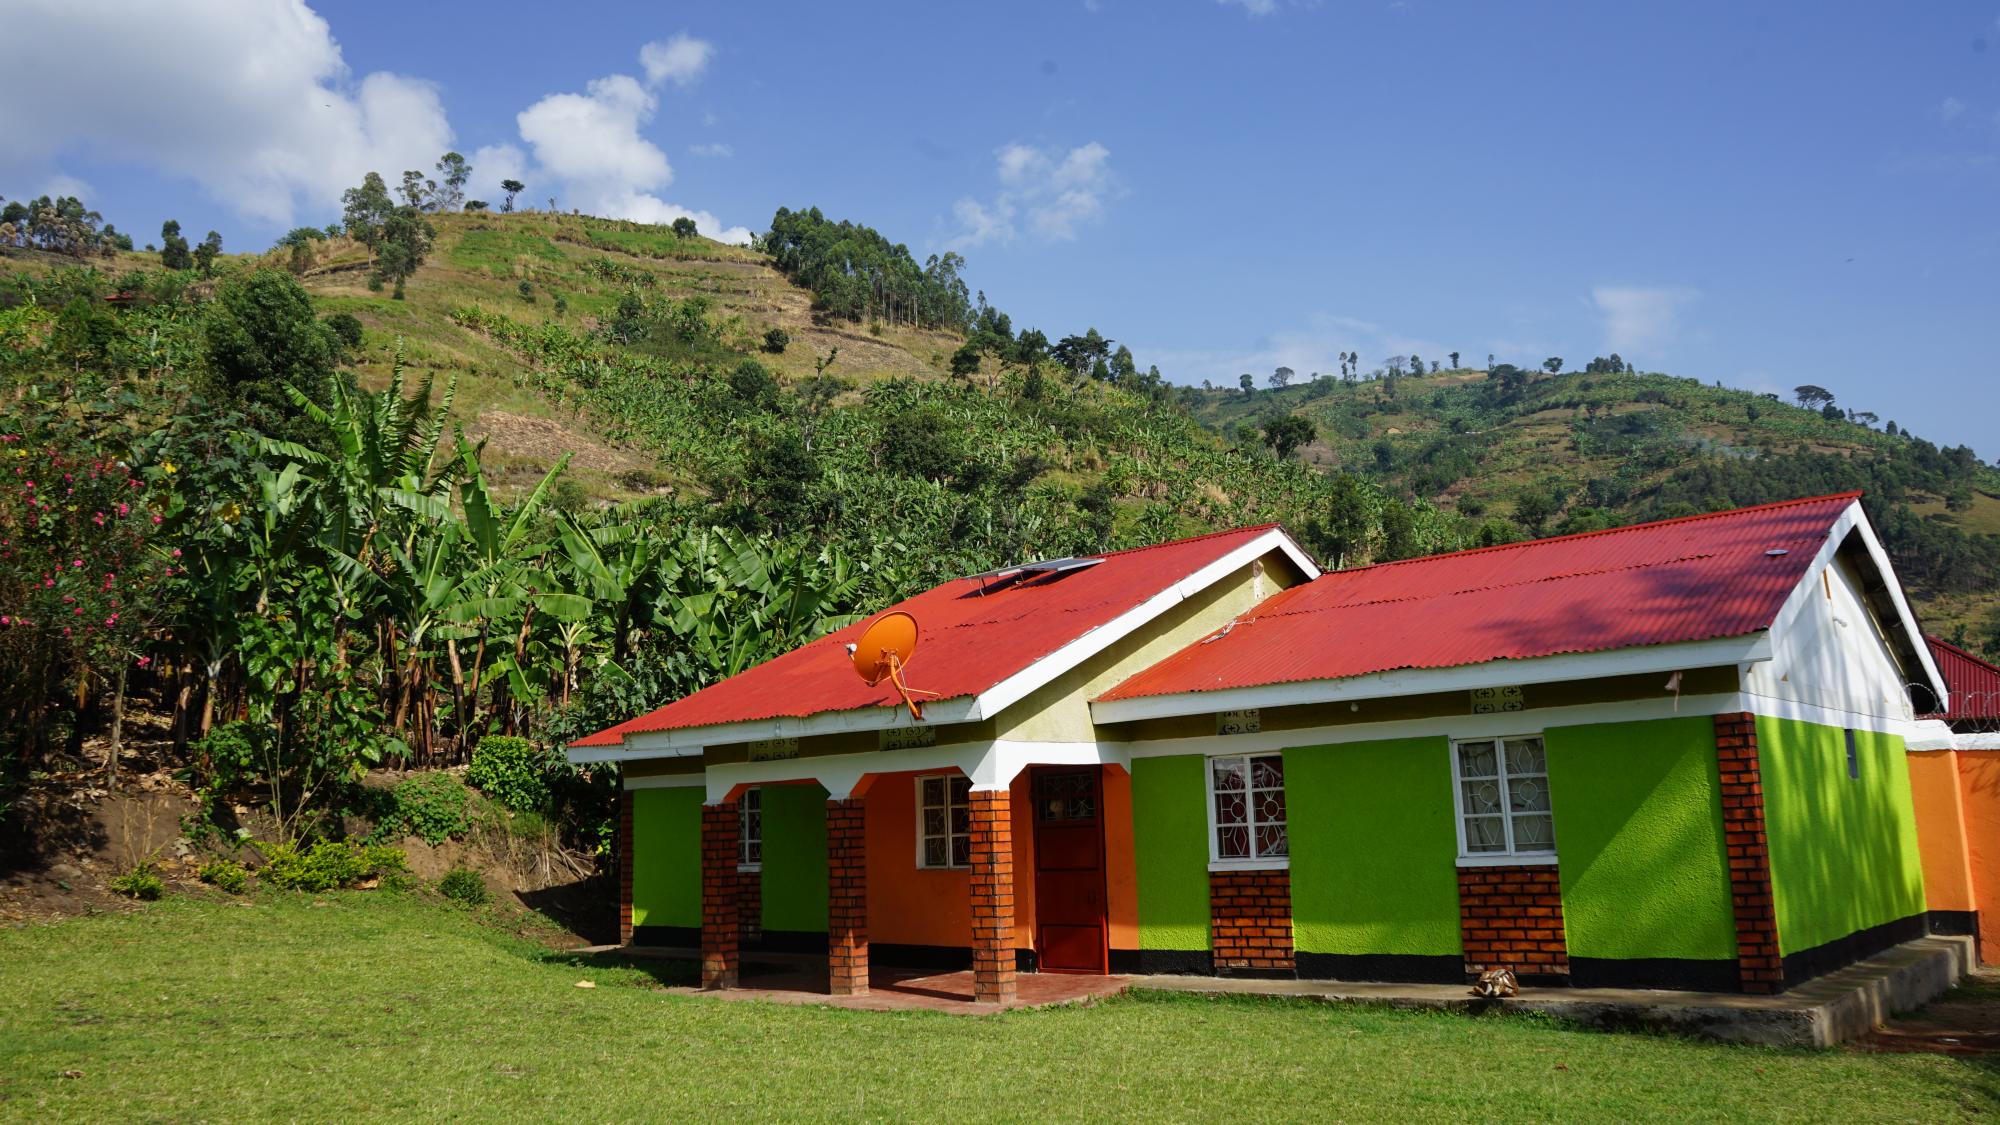 Photo 7: House of a big farmer with around 12 acres of land, Uganda 2022.